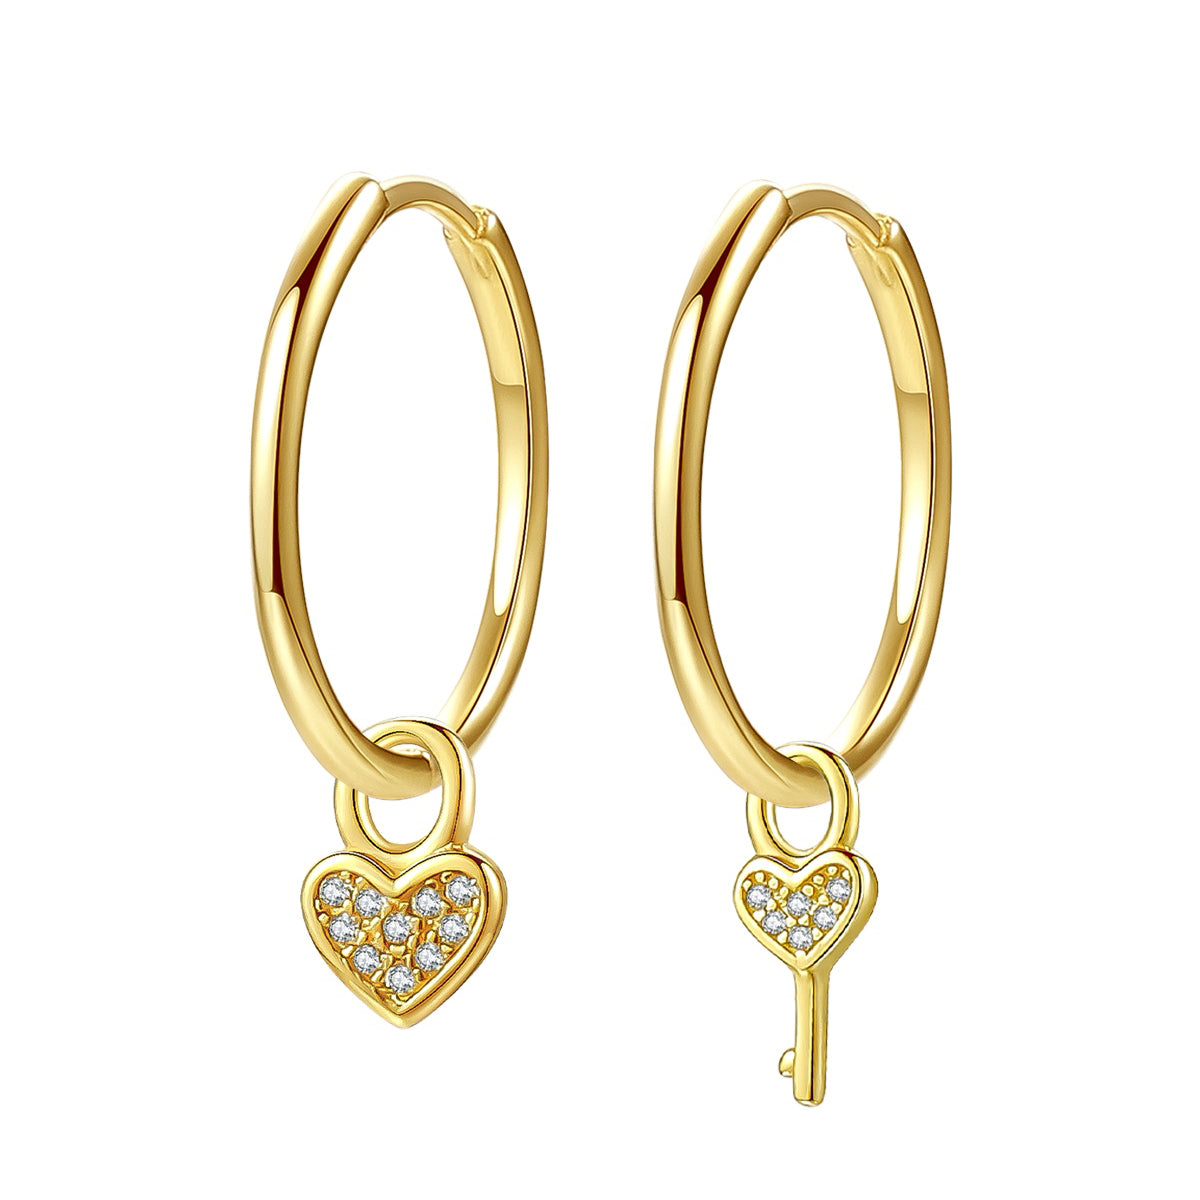 Heart and Key Charm Hoop Earrings Sterling Silver Gold